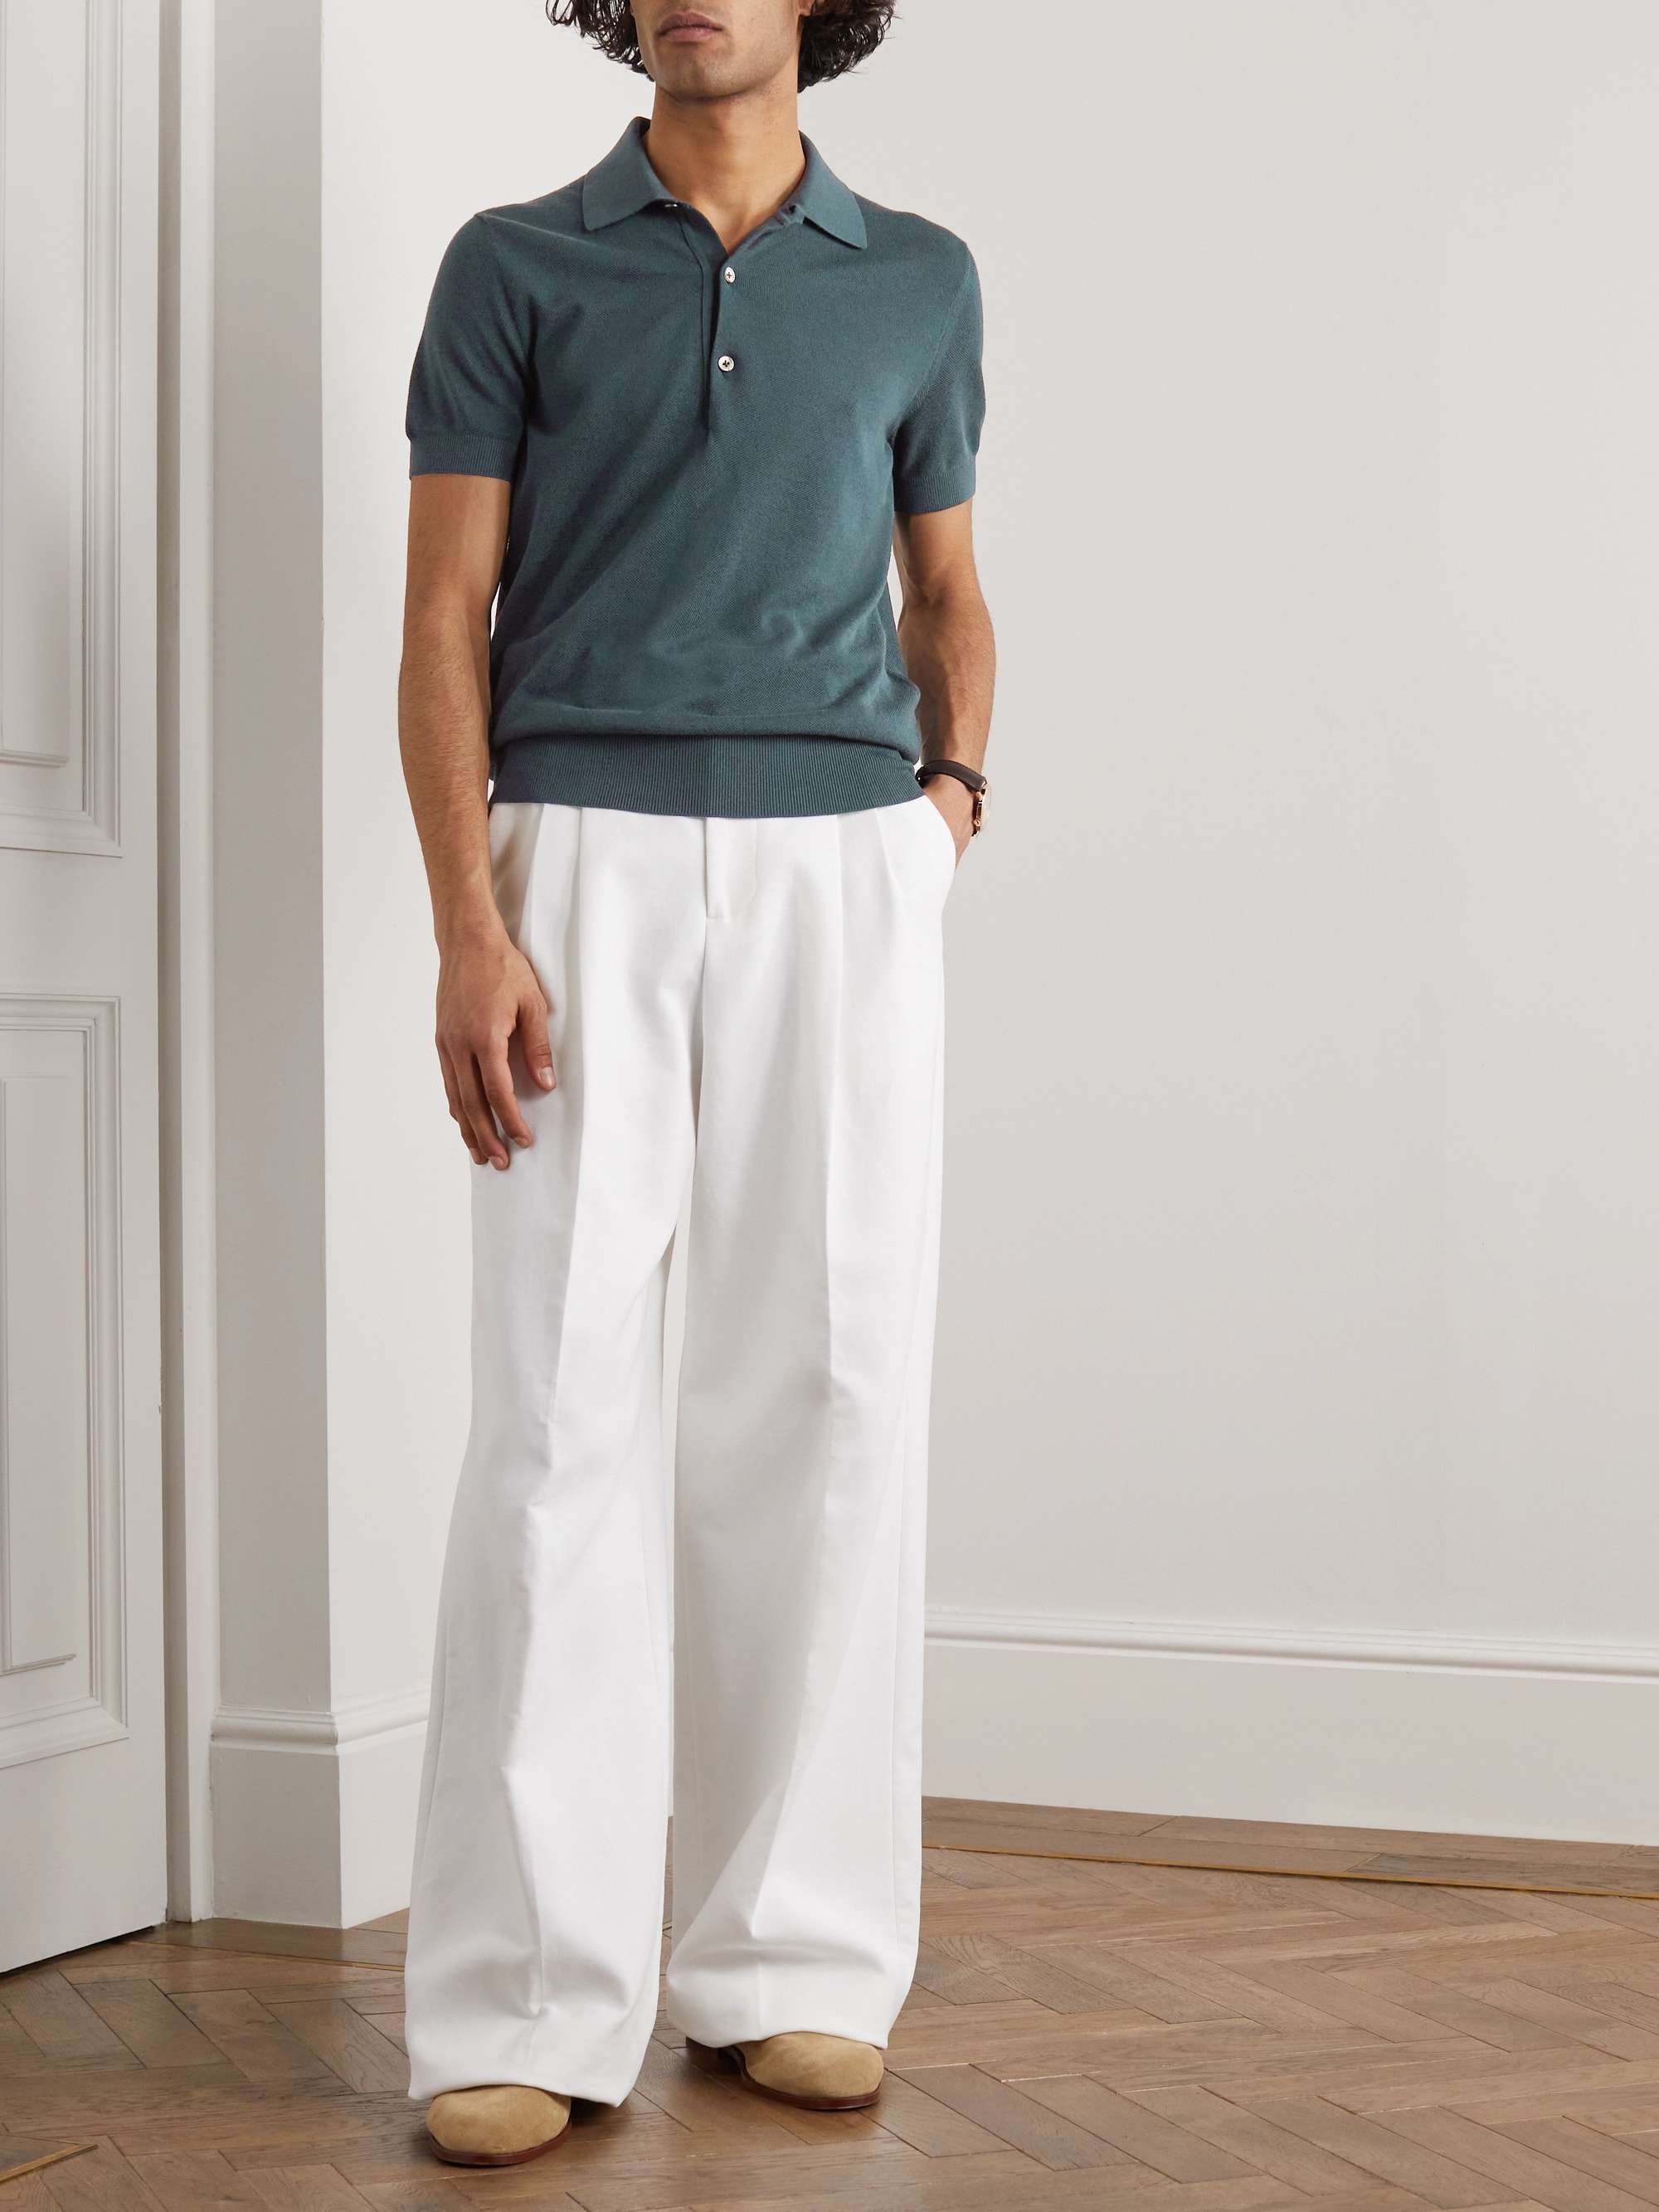 TOM FORD Silk and Cotton-Blend Piqué Polo Shirt